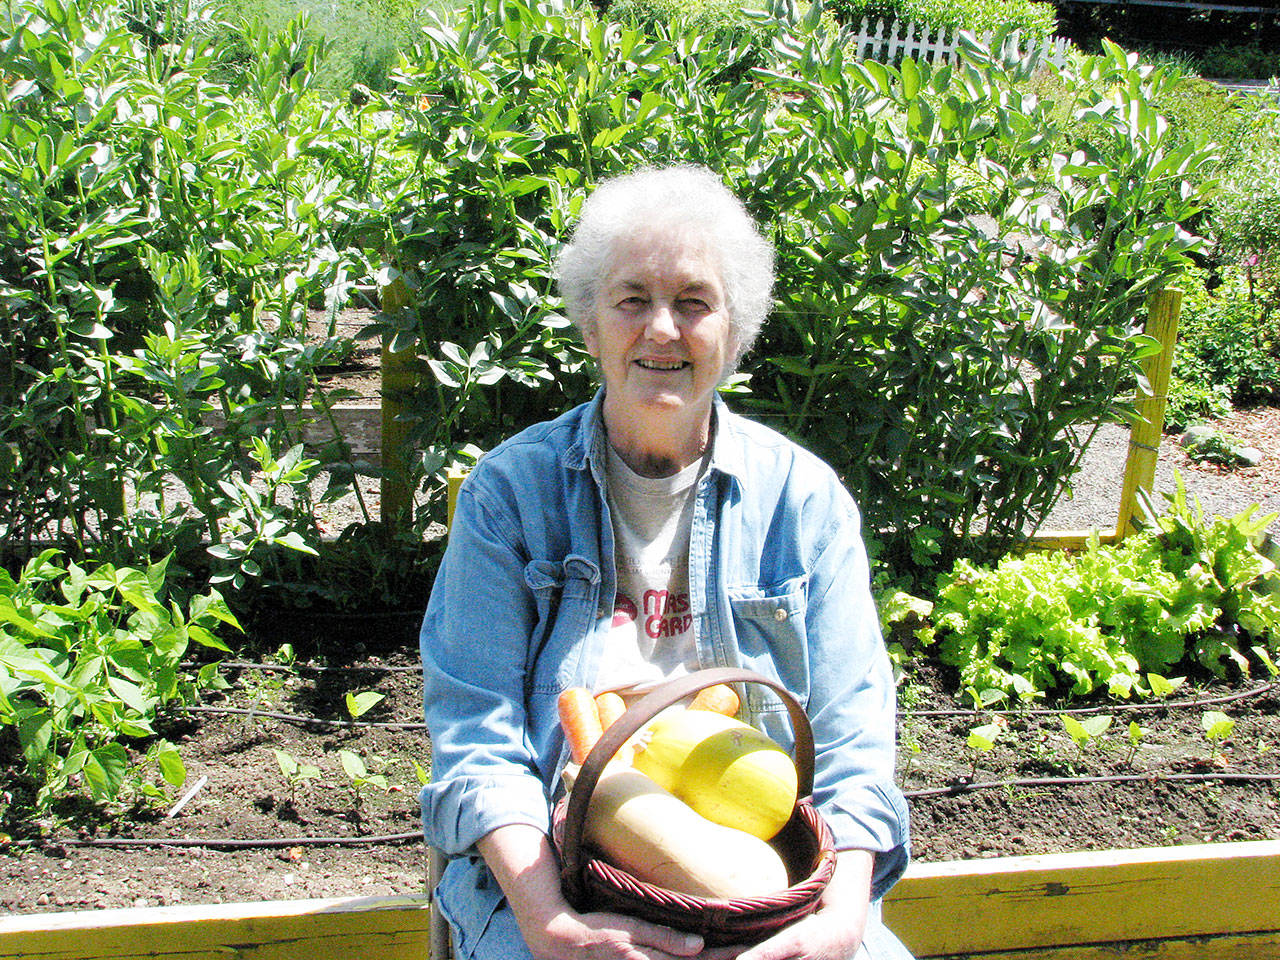 Veteran Master Gardener Muriel Nesbitt presents “Storing the Harvest” at noon, on Aug. 22 in Port Angeles, as part of the Green Thumb educational series. Photo by Amanda Rosenberg